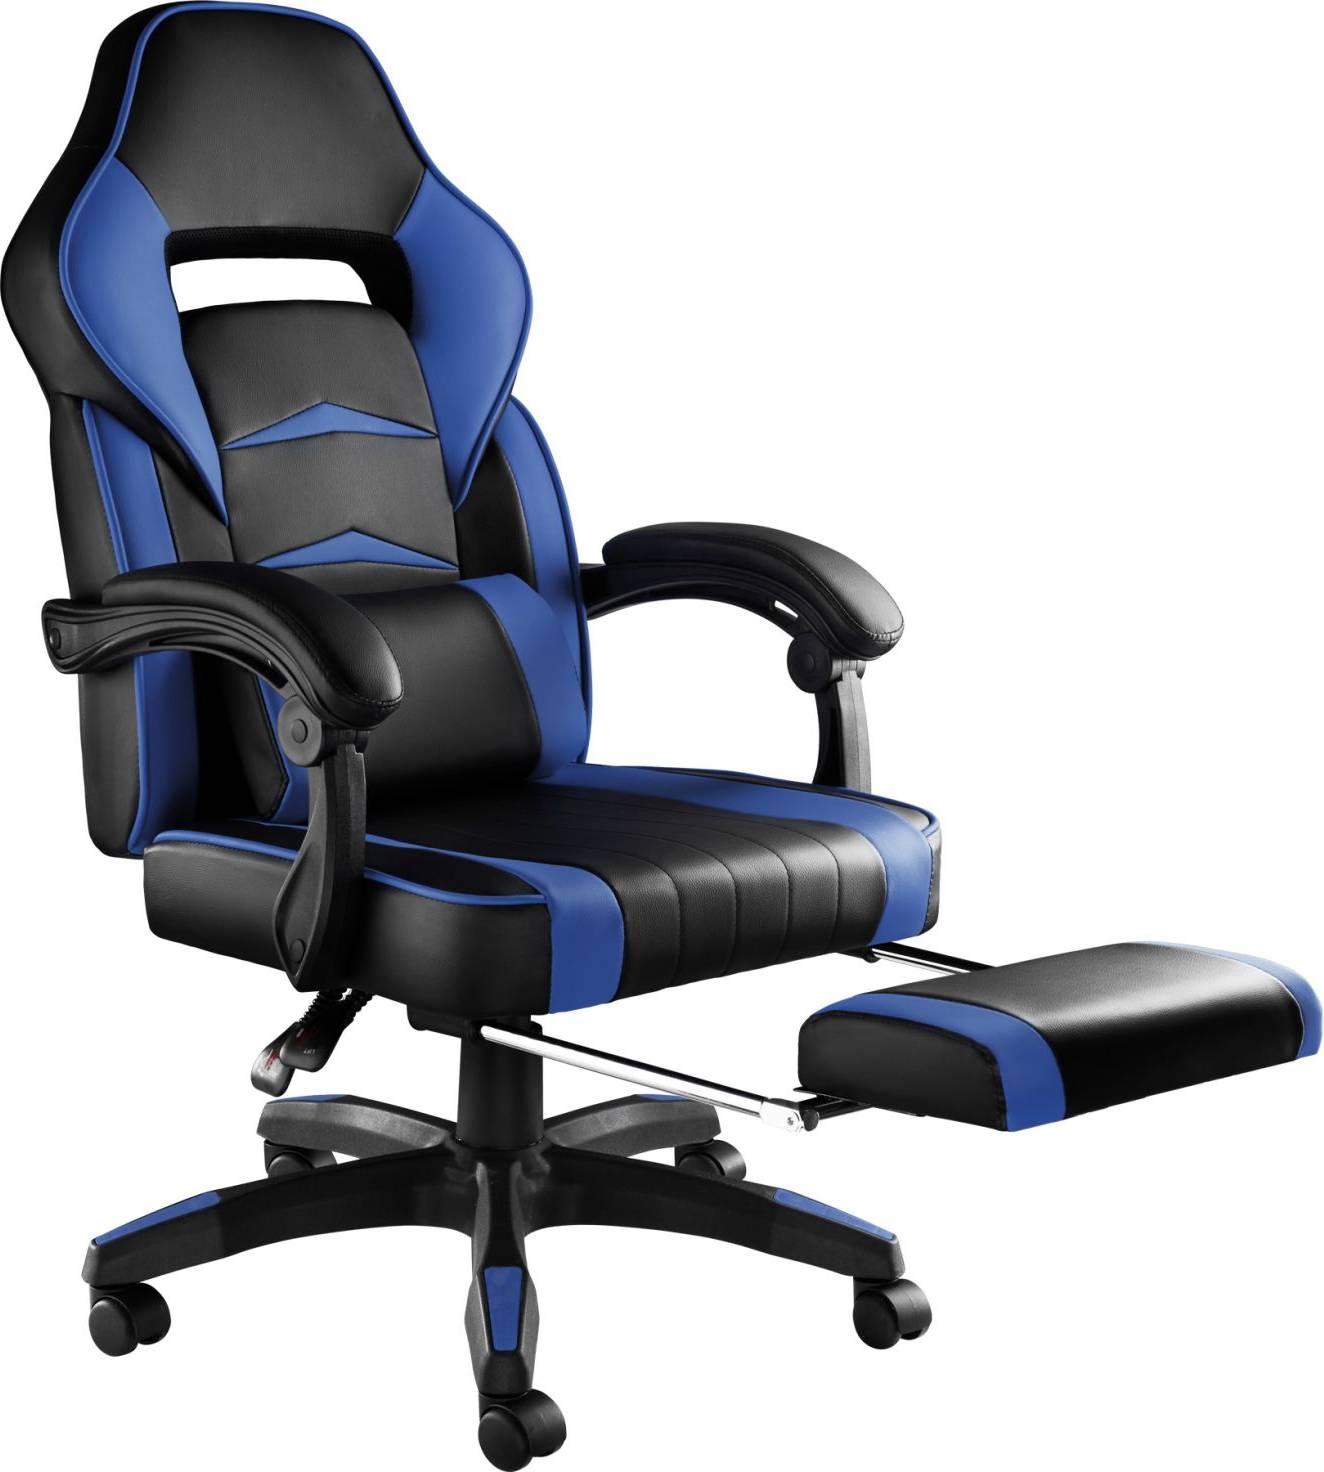  Bild på tectake Storm Gaming Chair - Black/Blue gamingstol